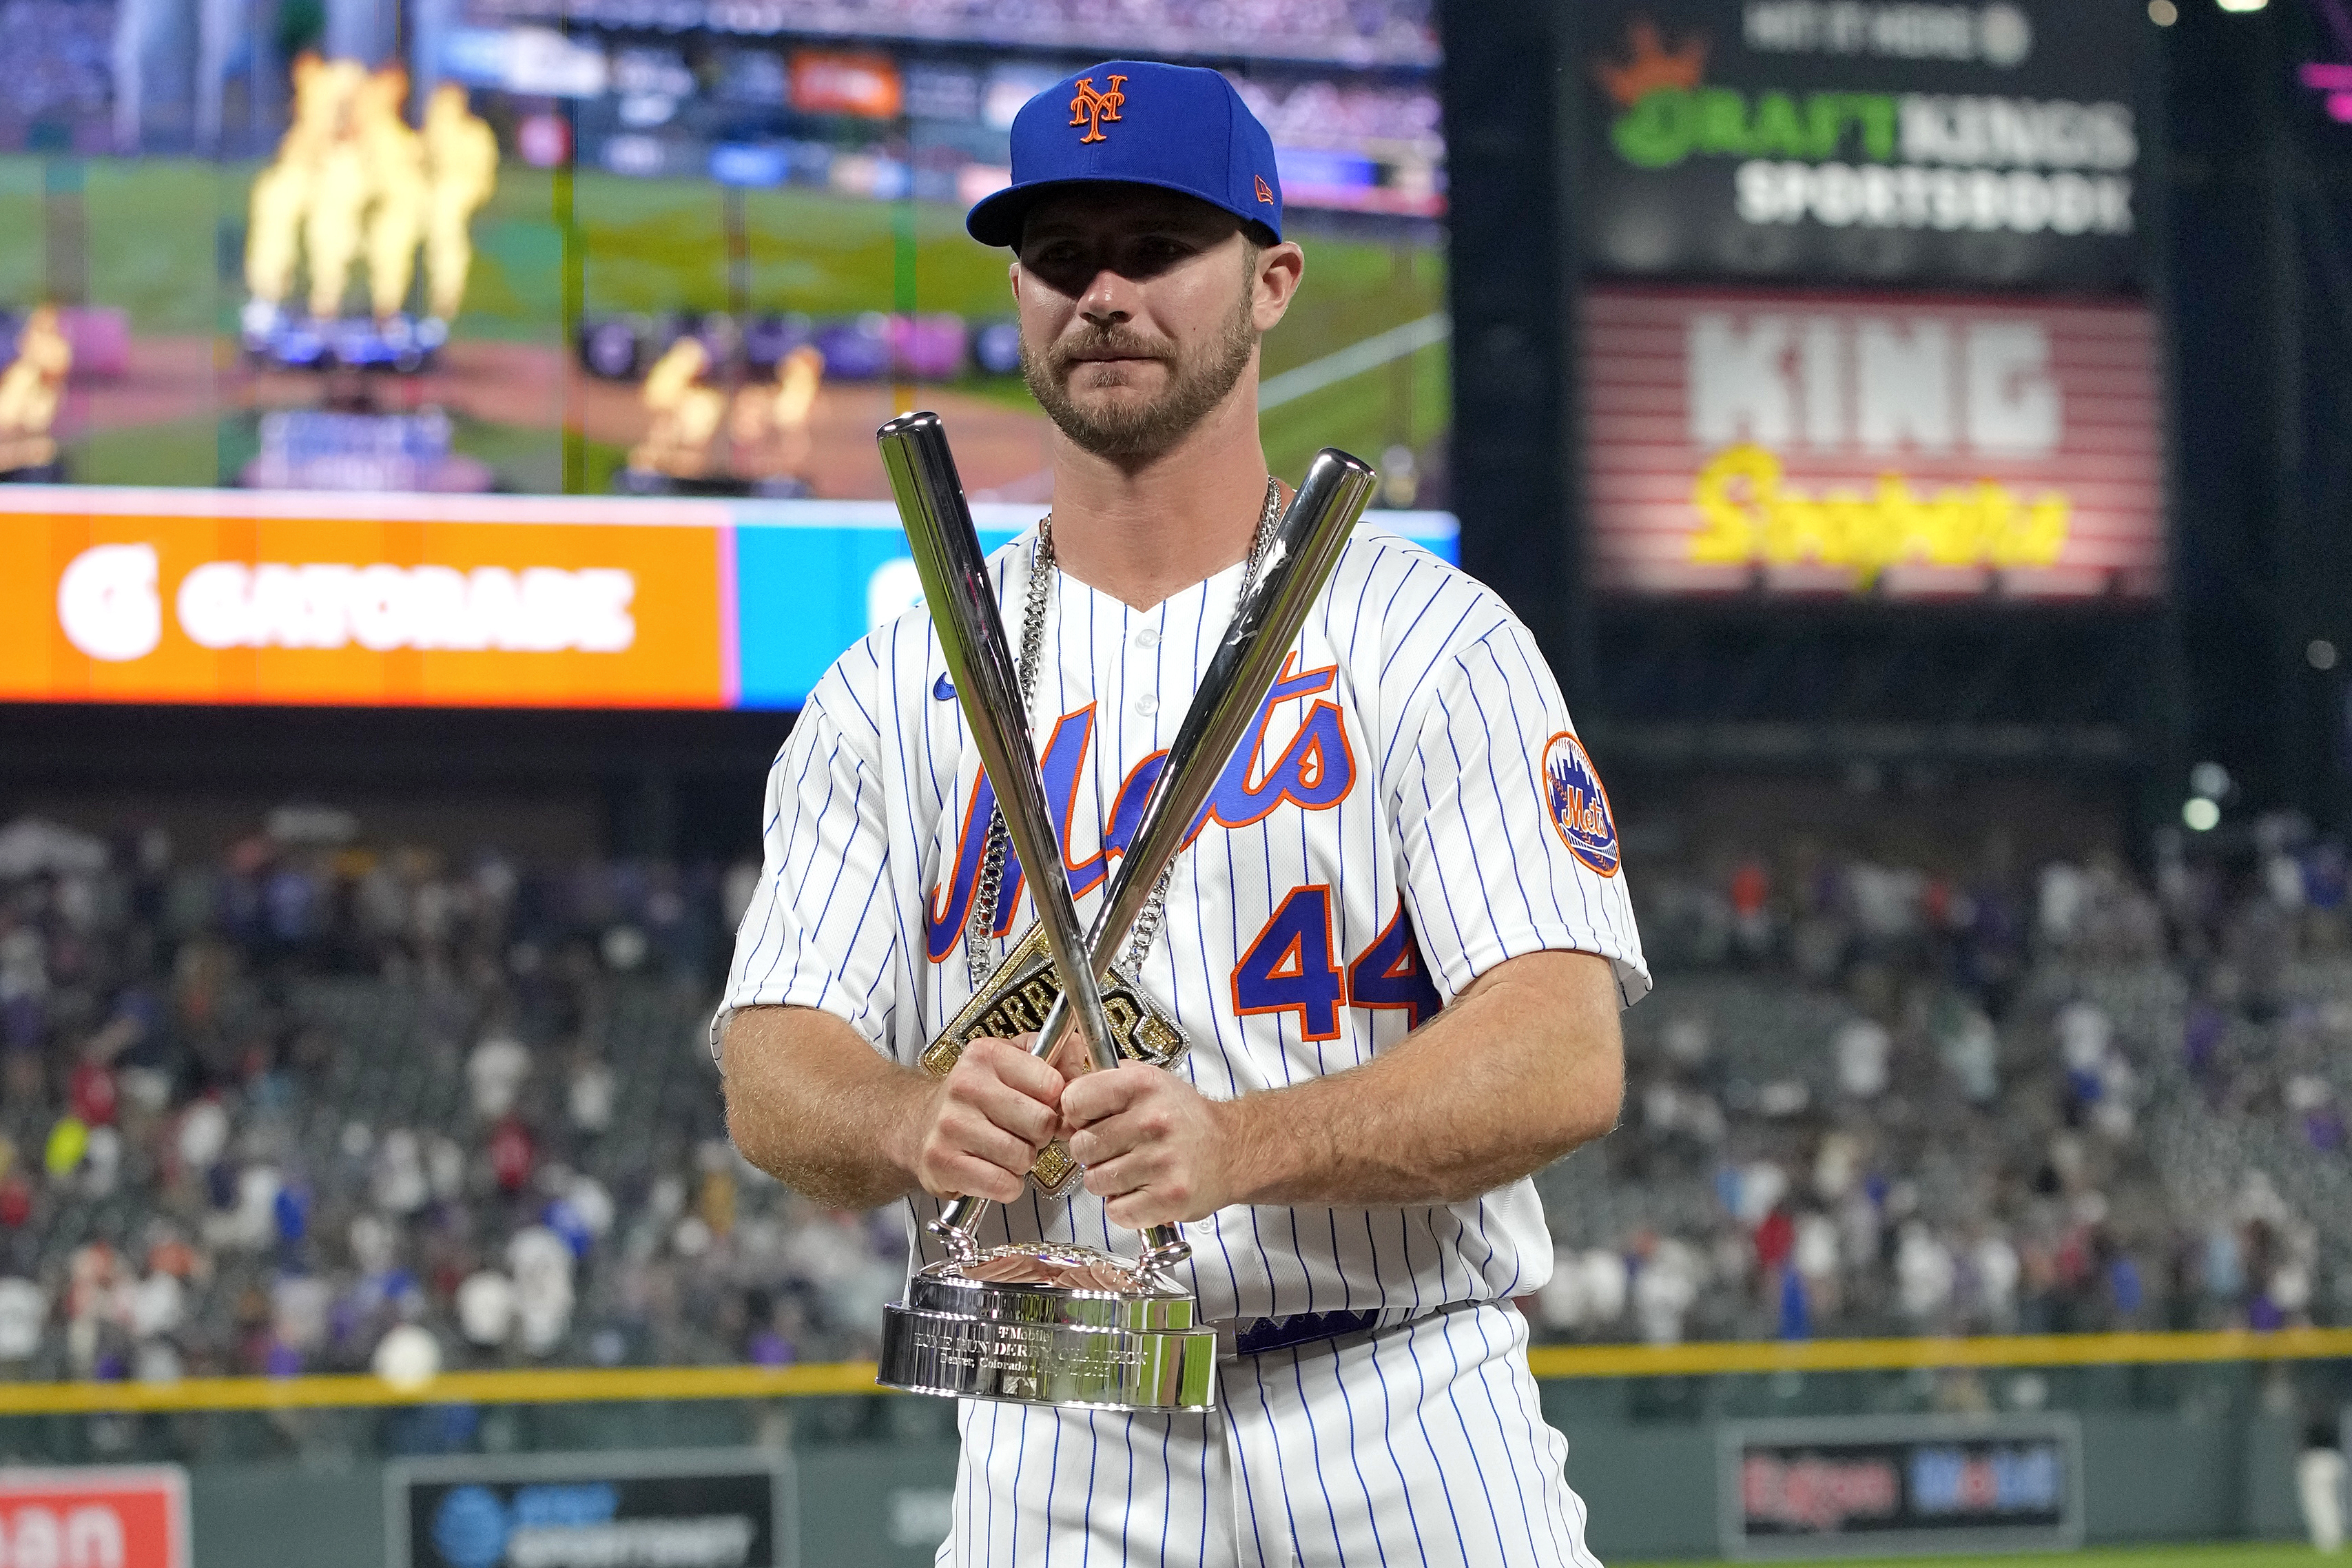 Florida Baseball: Pete Alonso puts the New York Mets on his back